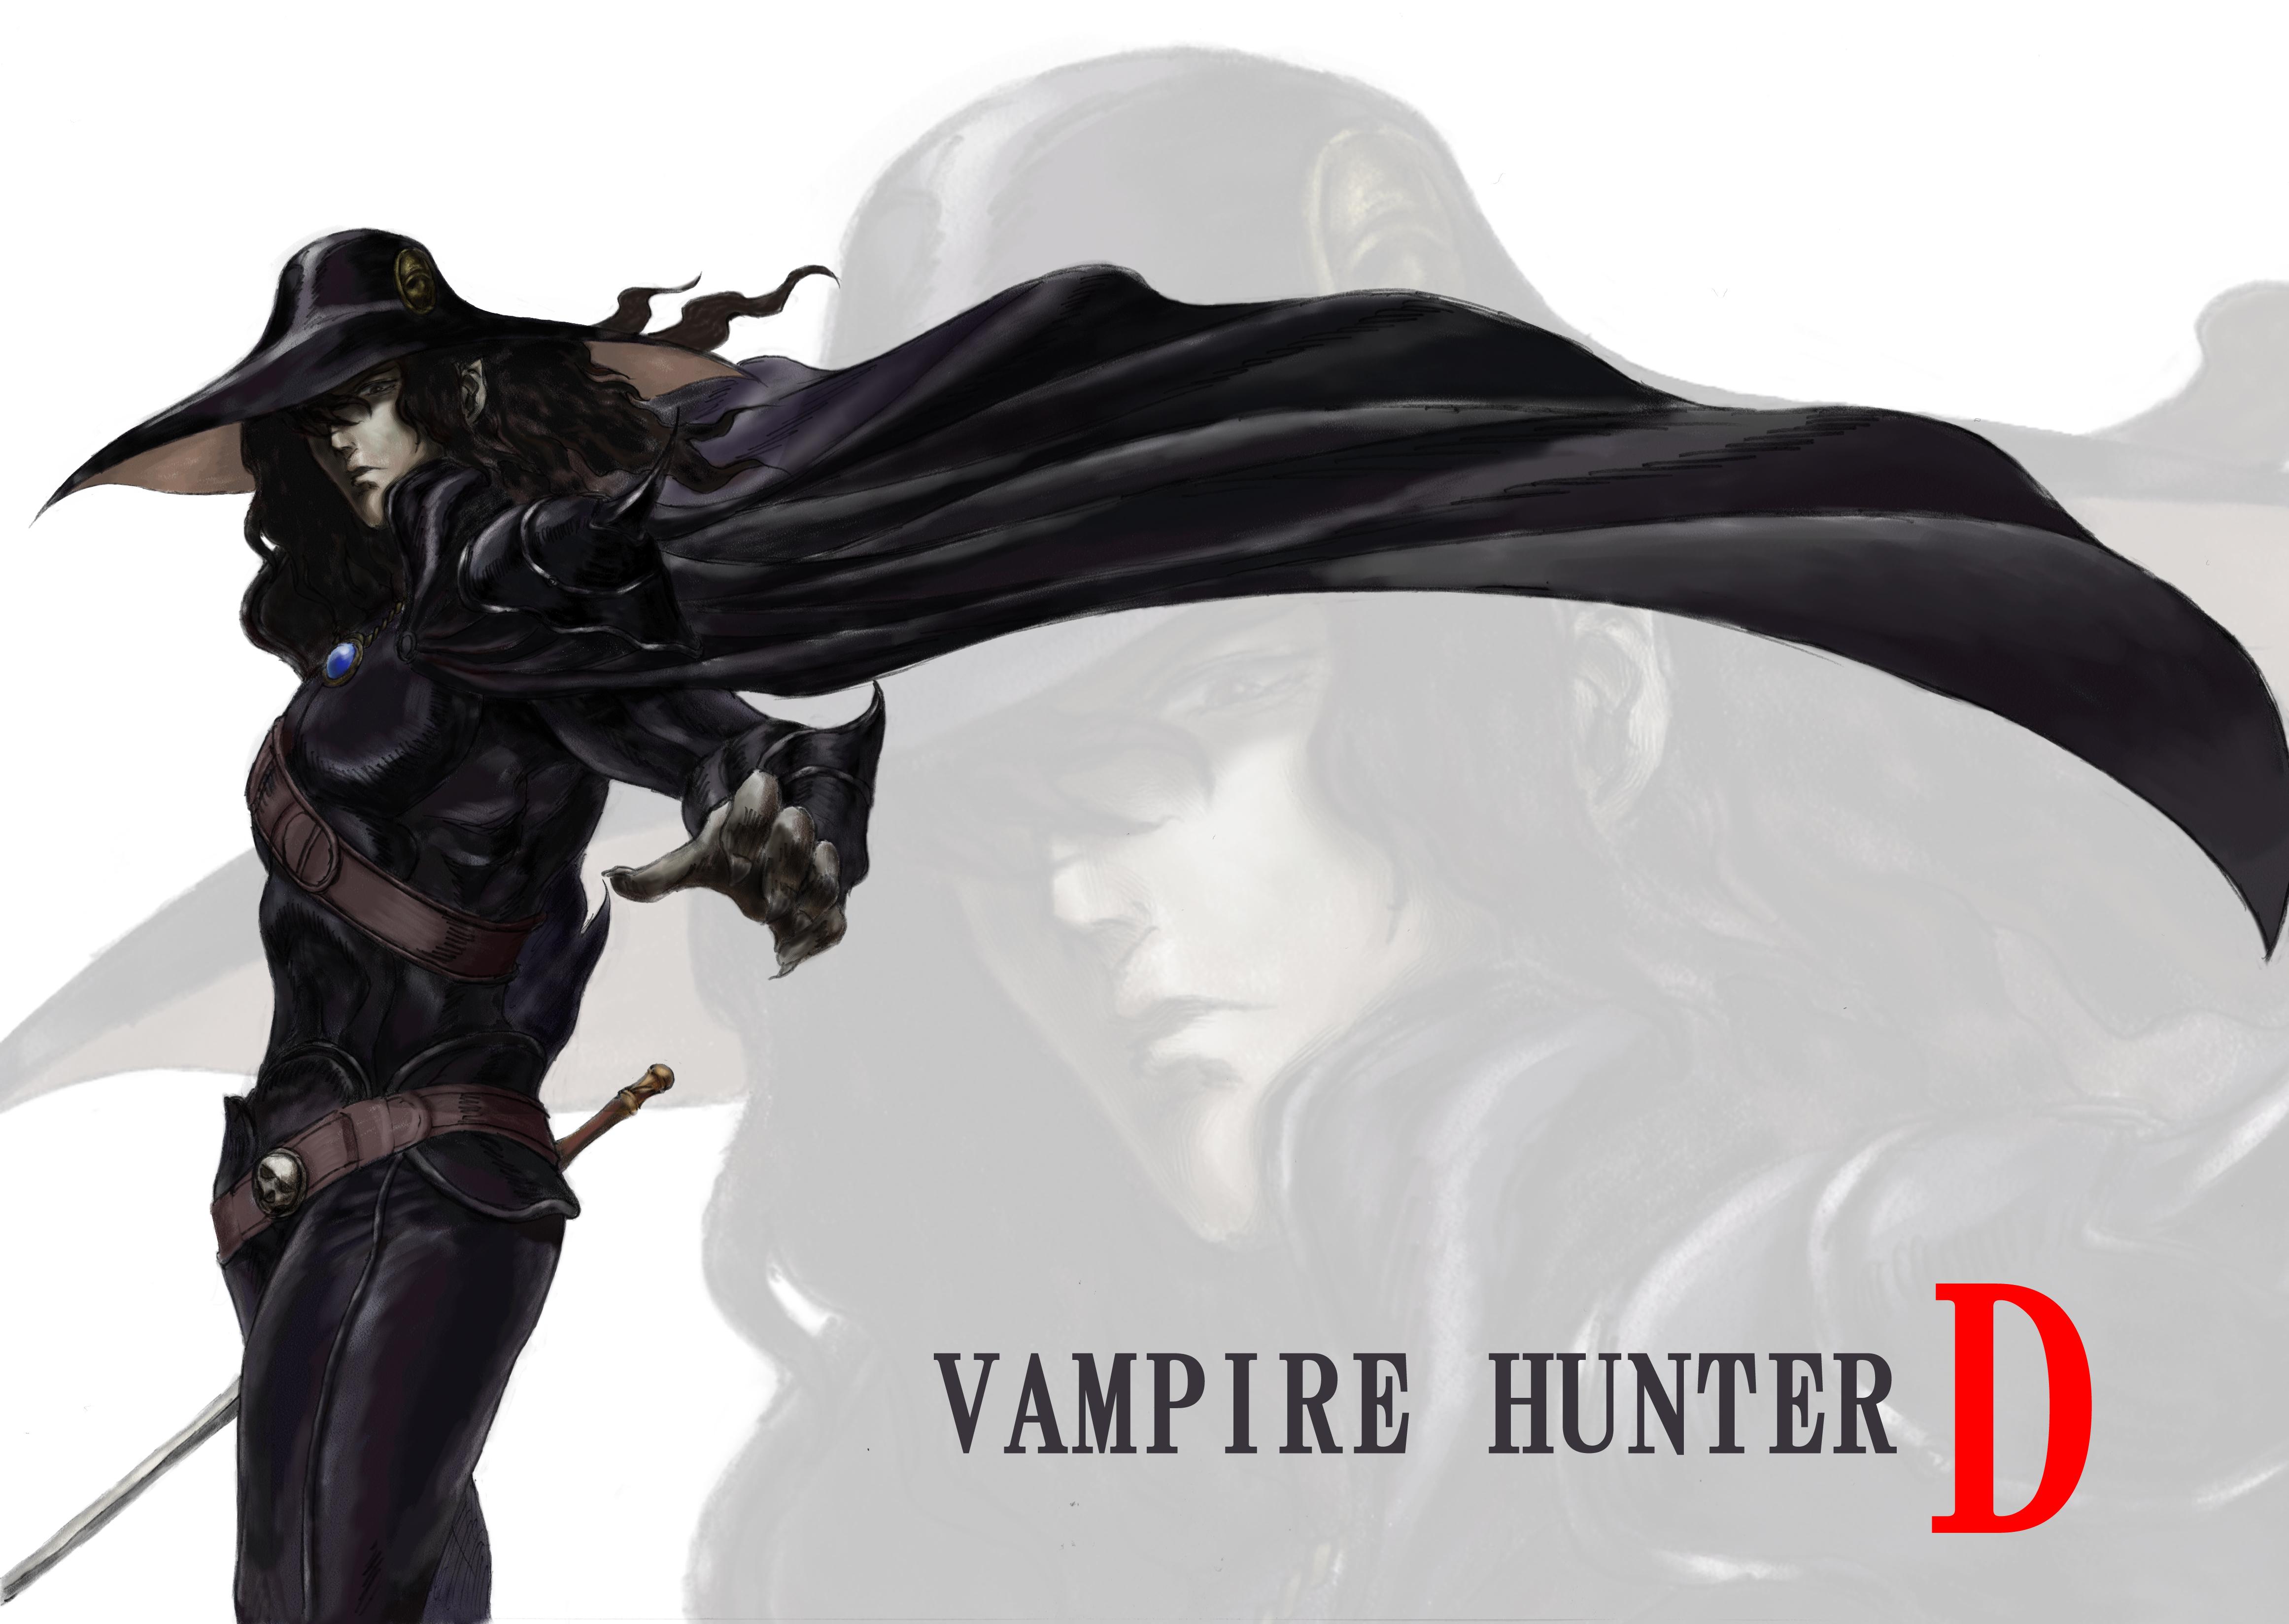 Vampire Hunter D Returns With New Series